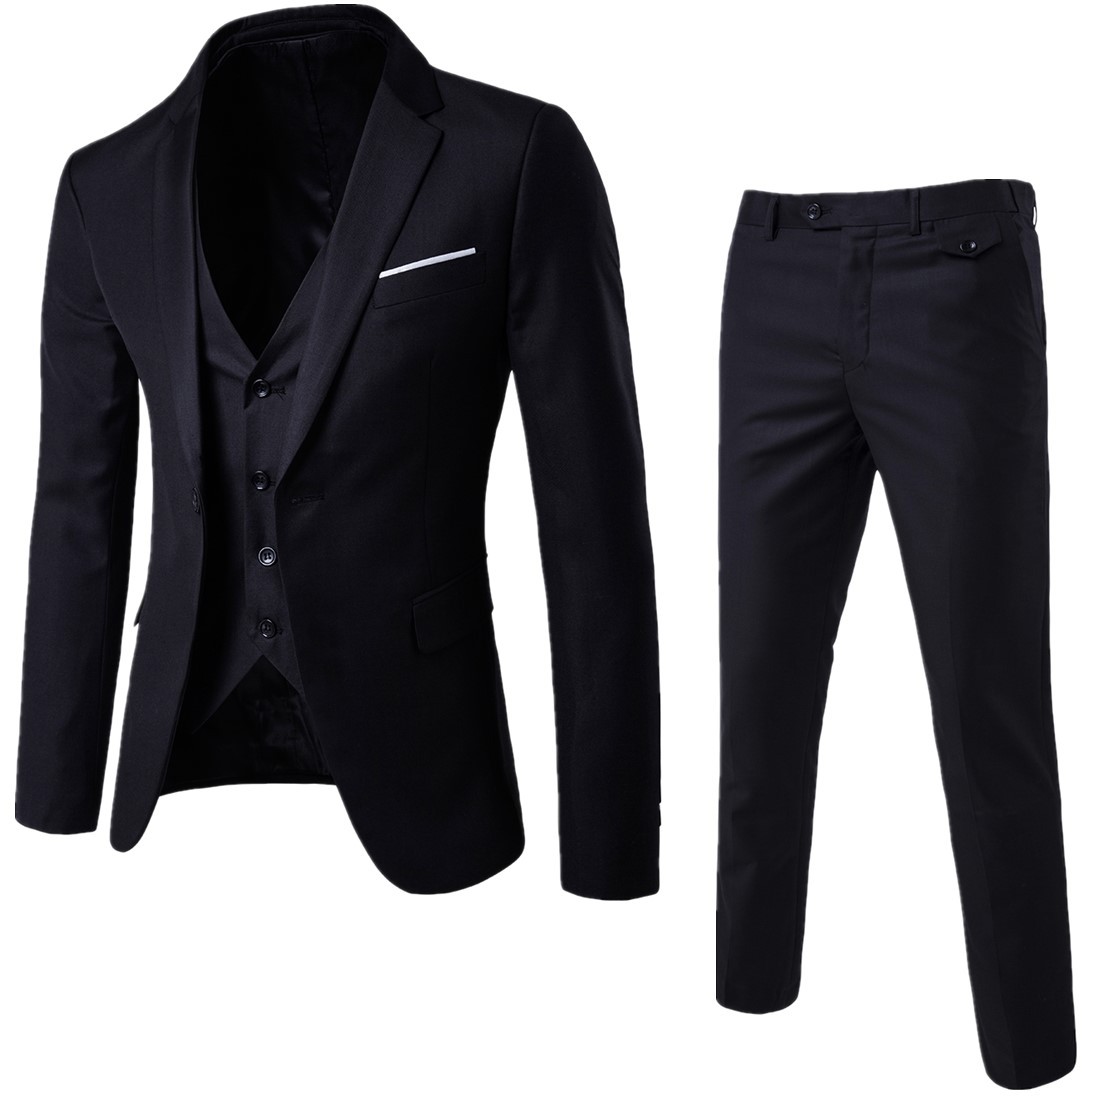 Manufacturer's foreign trade cross border e-commerce popular men's casual suit set three piece set Korean slim business suit man